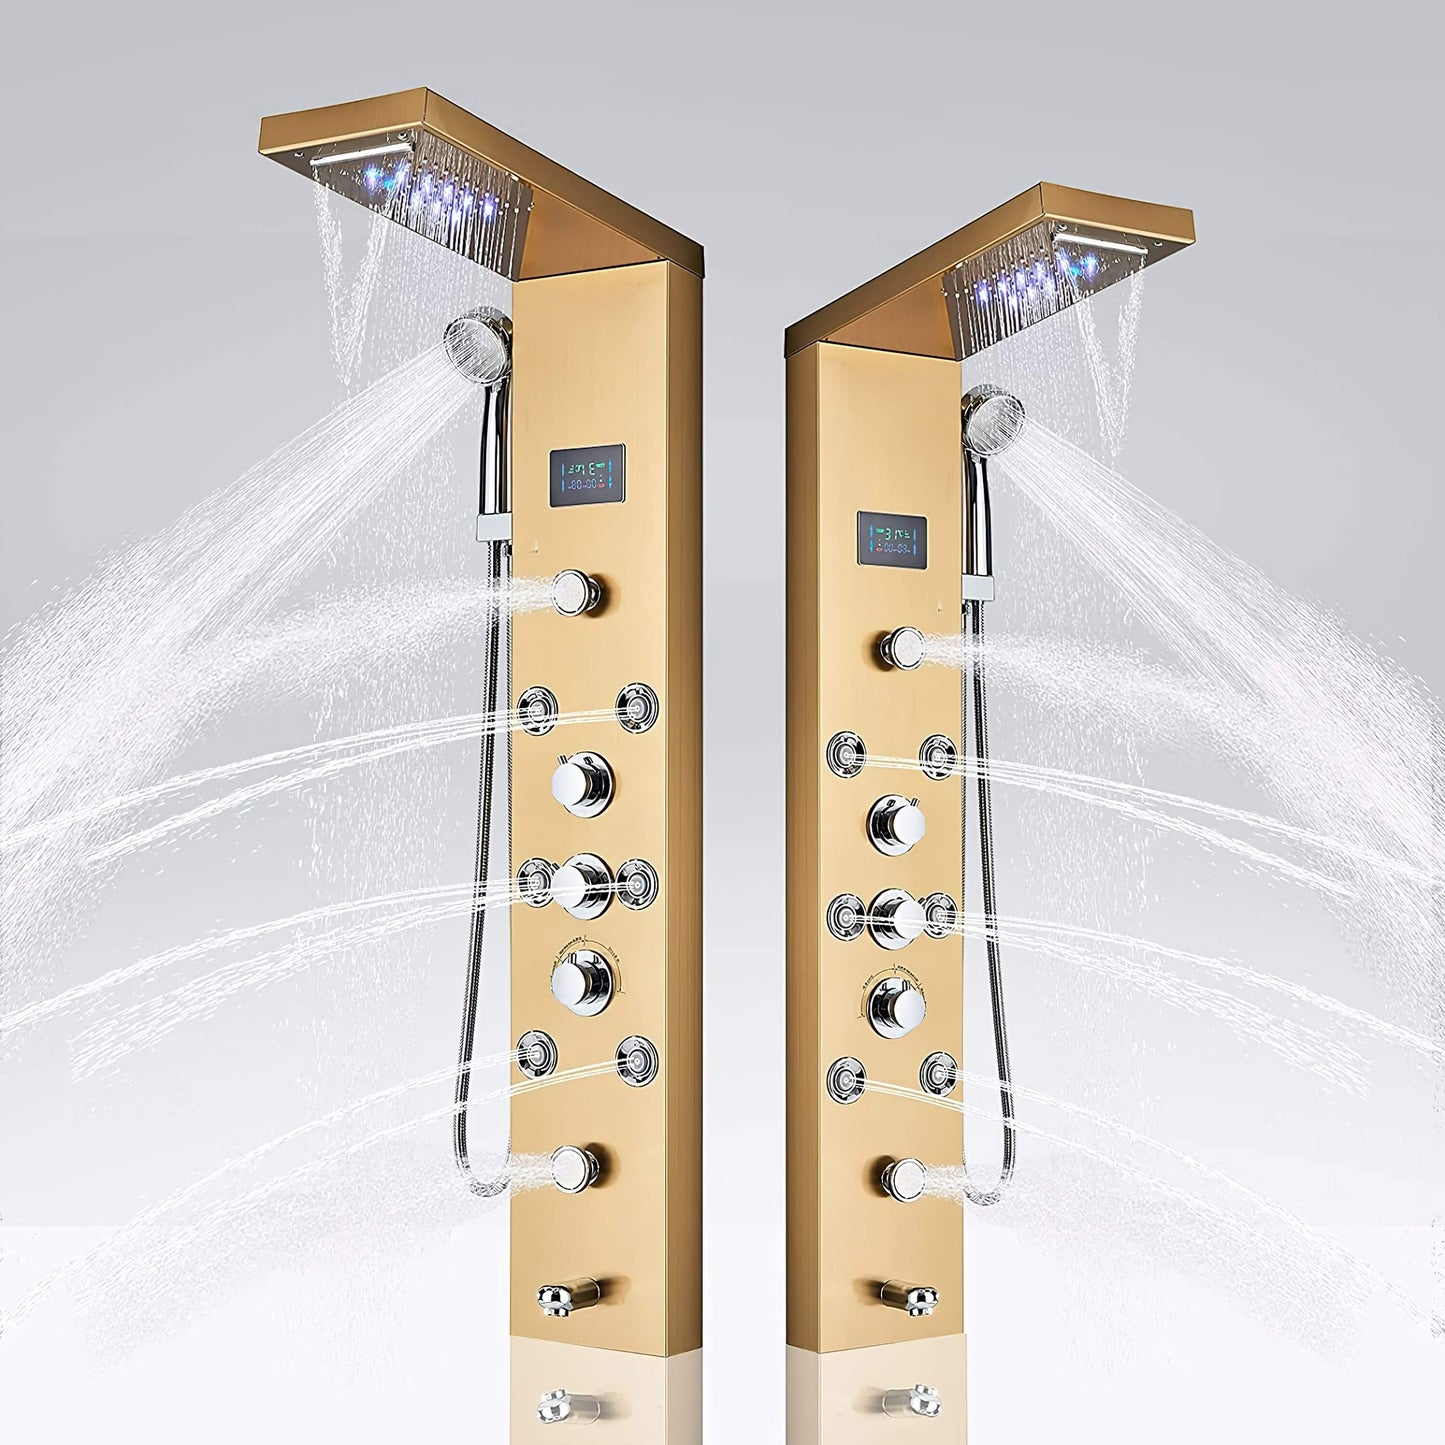 FIVESTAR Stainless Steel Led Shower Panel Tower 6-in-1 Multi-Function